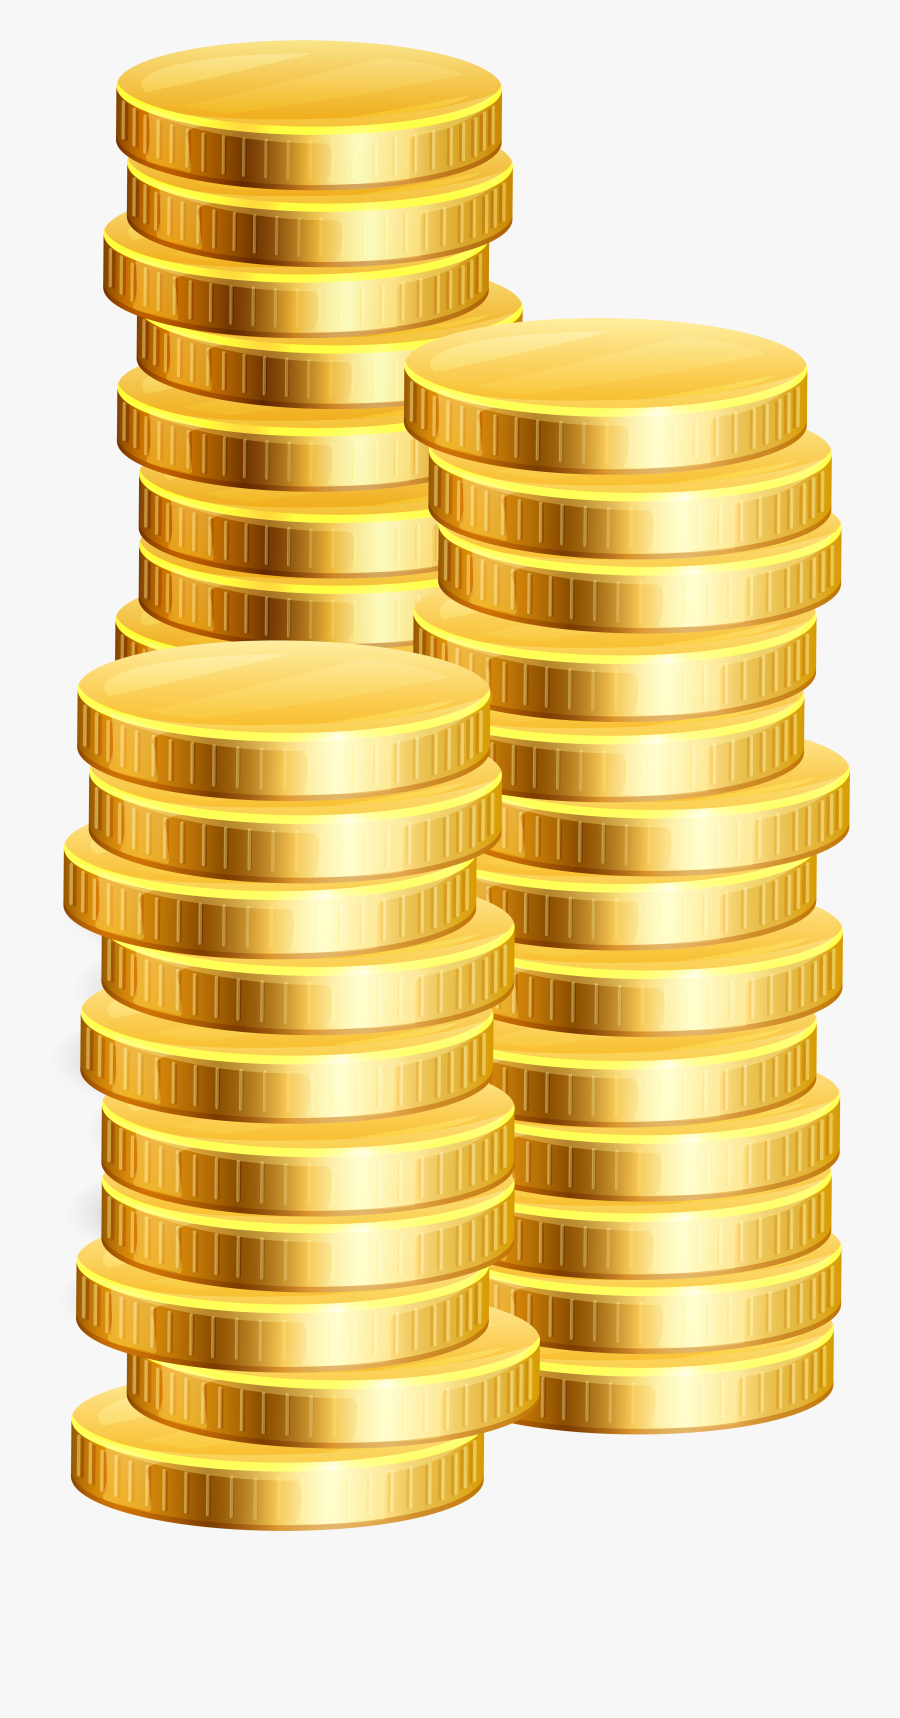 Coins Png Clip Art - Coins Png Clipart, Transparent Clipart